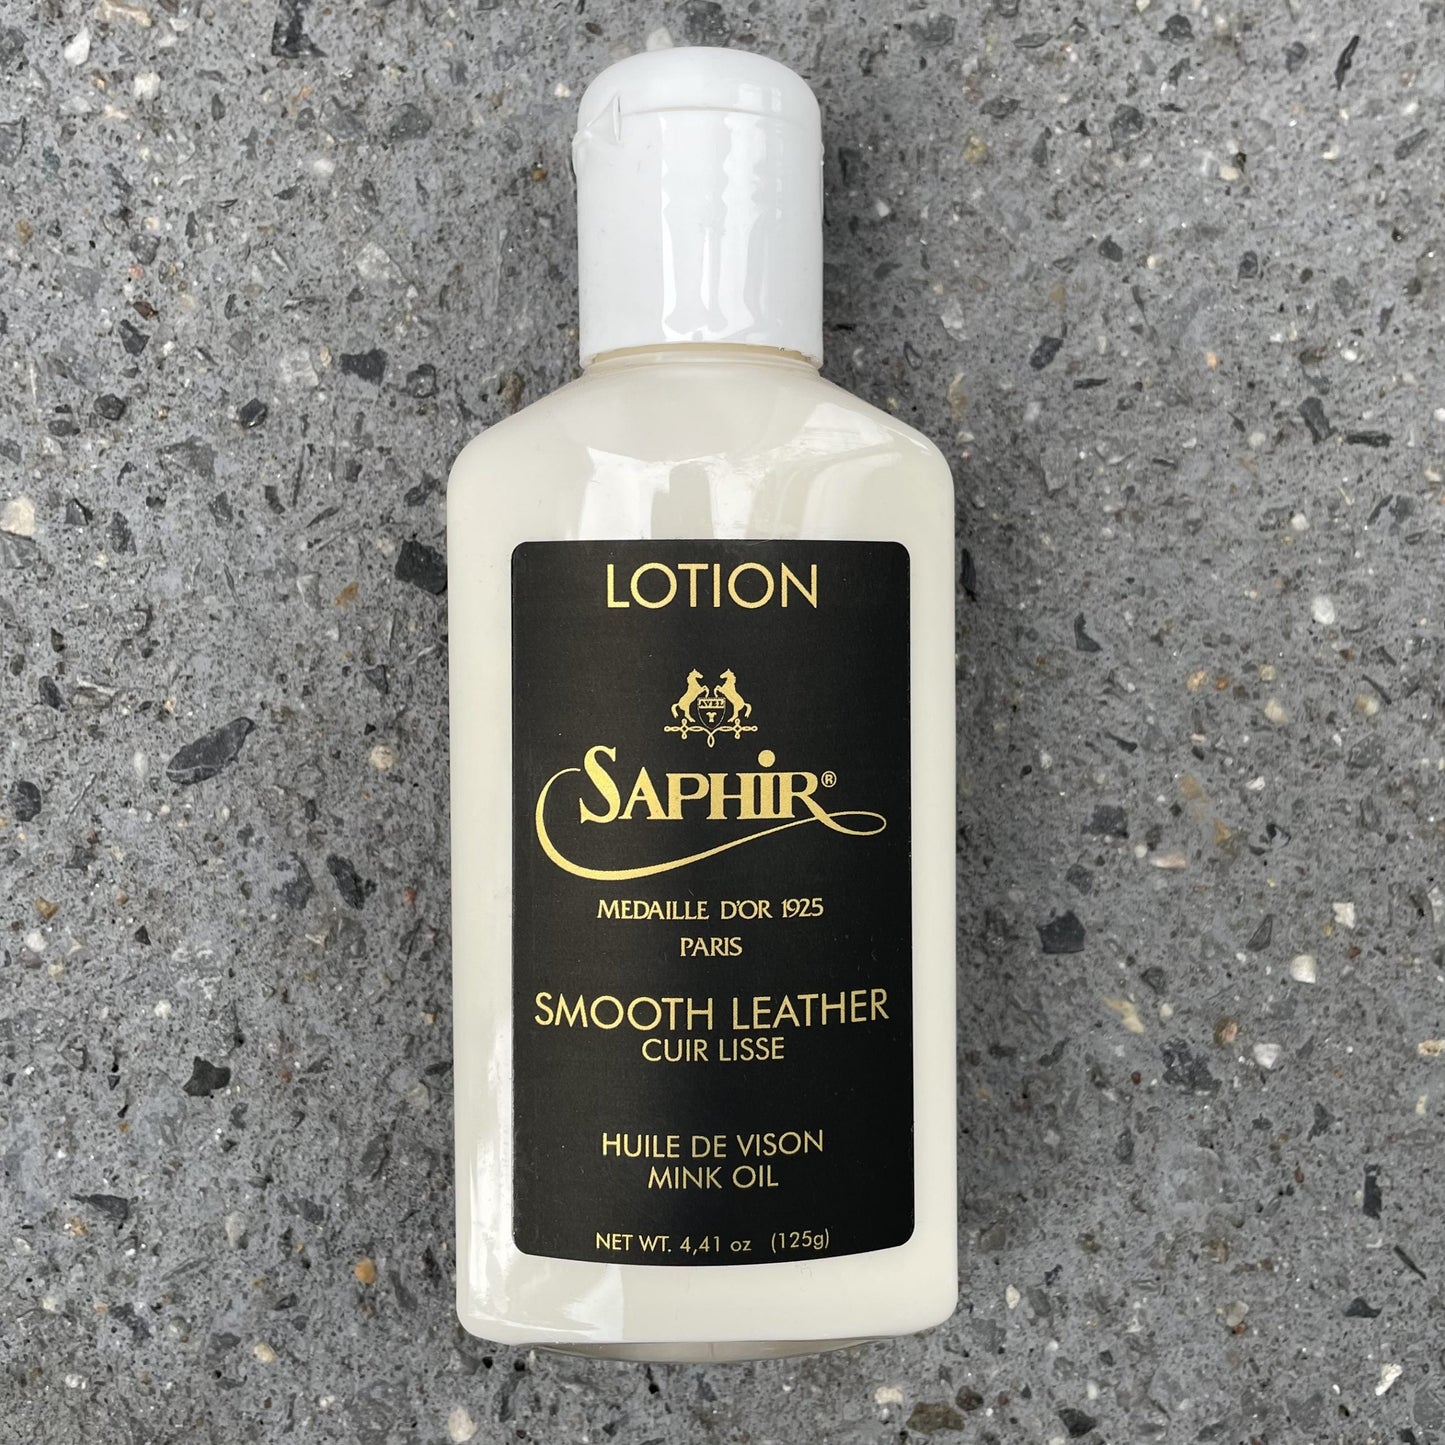 Saphir Leather Lotion / Mink Oil